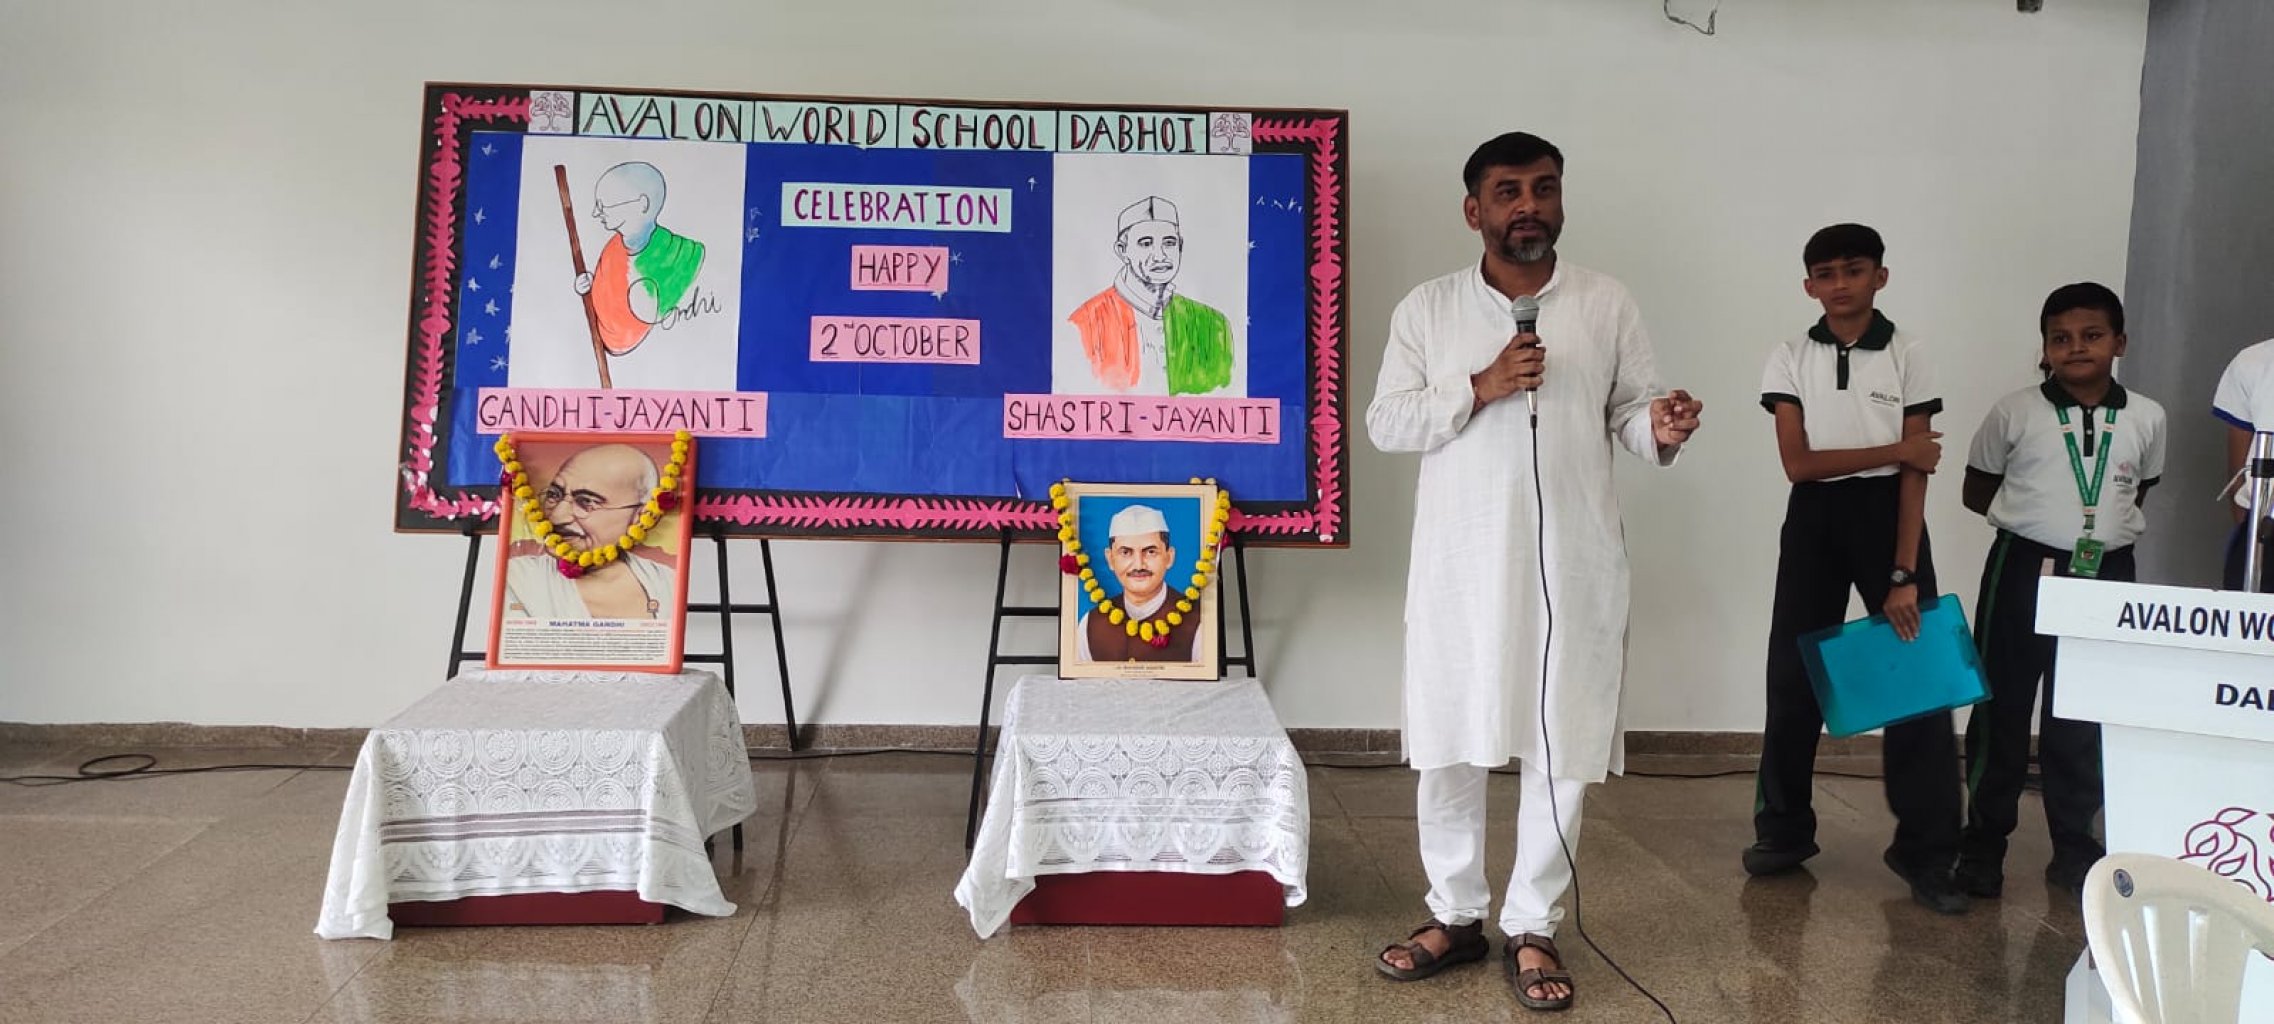 Gandhi Jayanti and Shastri Jayanti Celebration